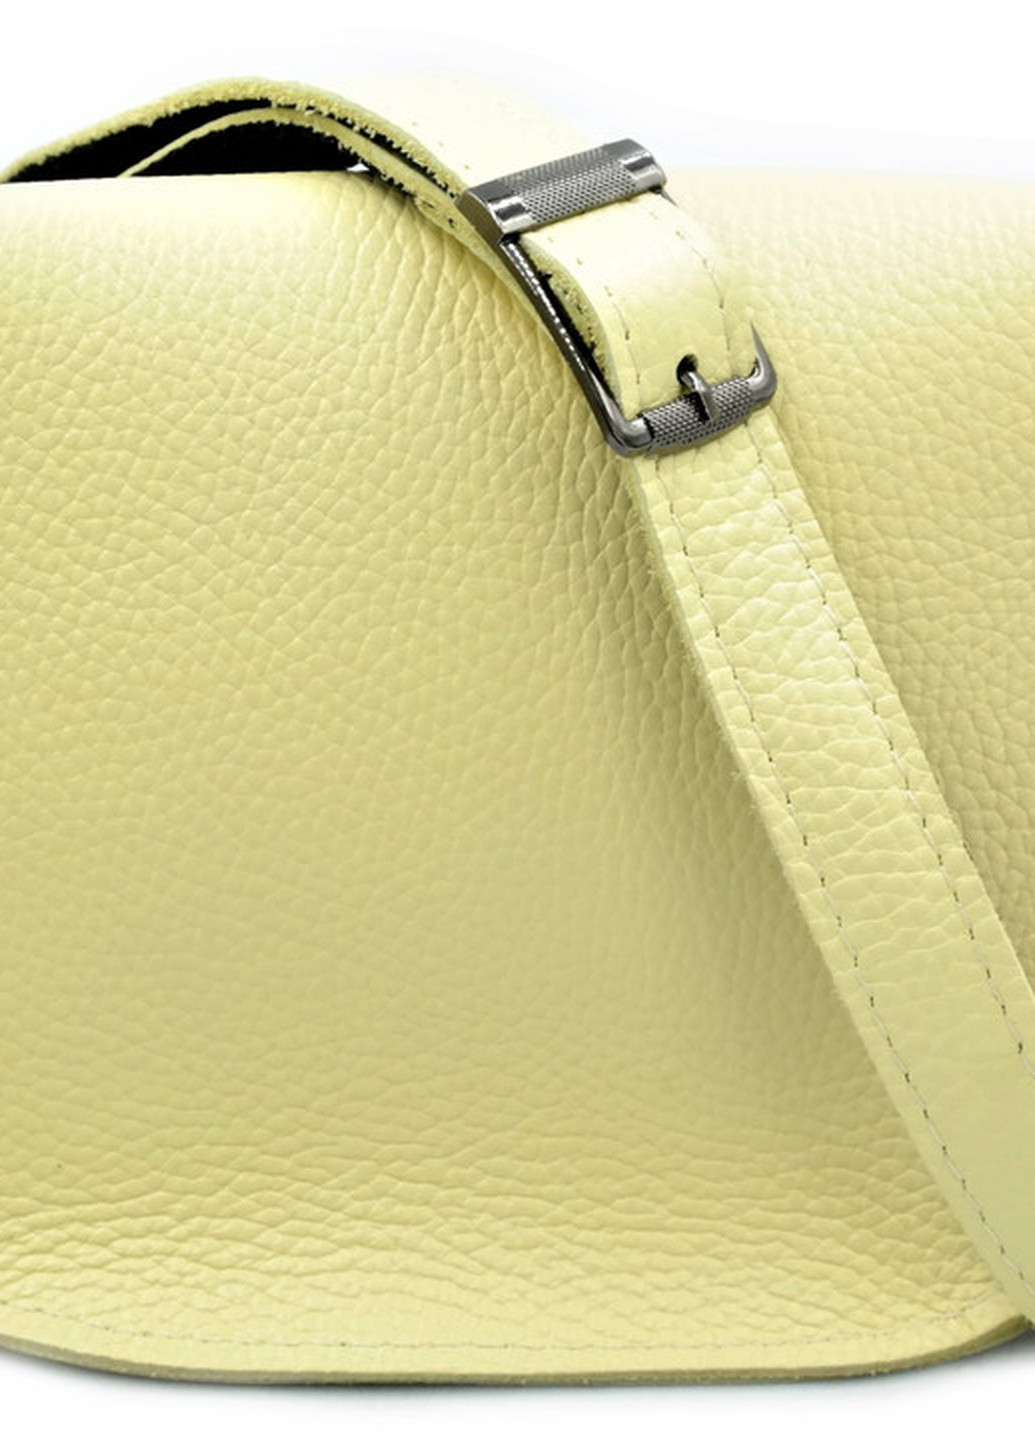 Женская кожаная сумка на пояс бананка цвет жёлтый SKL85-295516 New Trend (259161357)